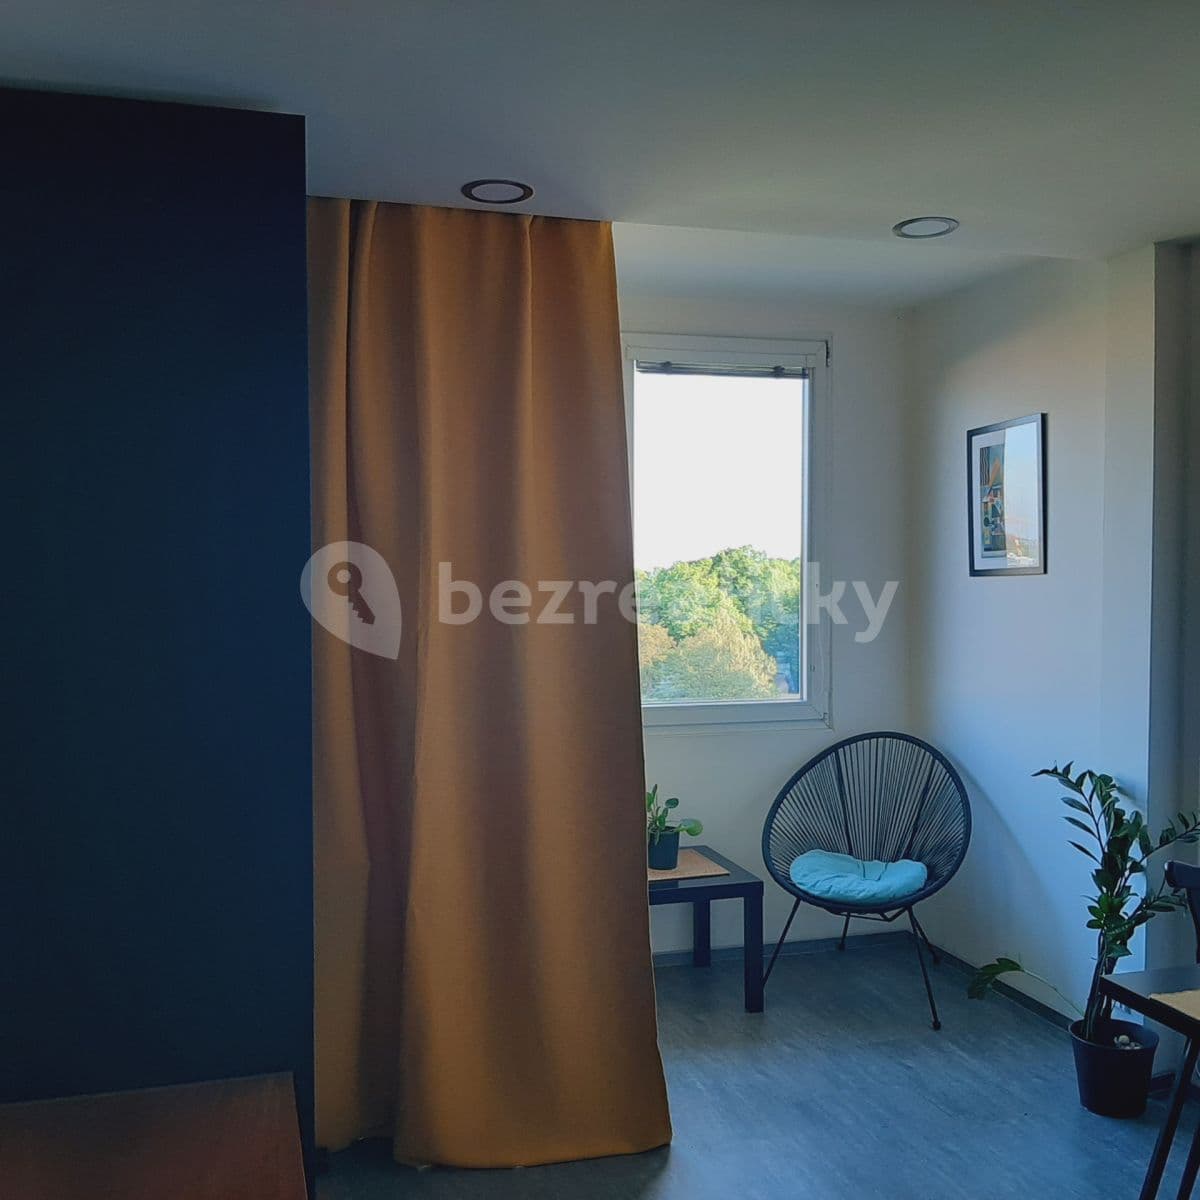 1 bedroom with open-plan kitchen flat to rent, 41 m², Prosecká, Prague, Prague